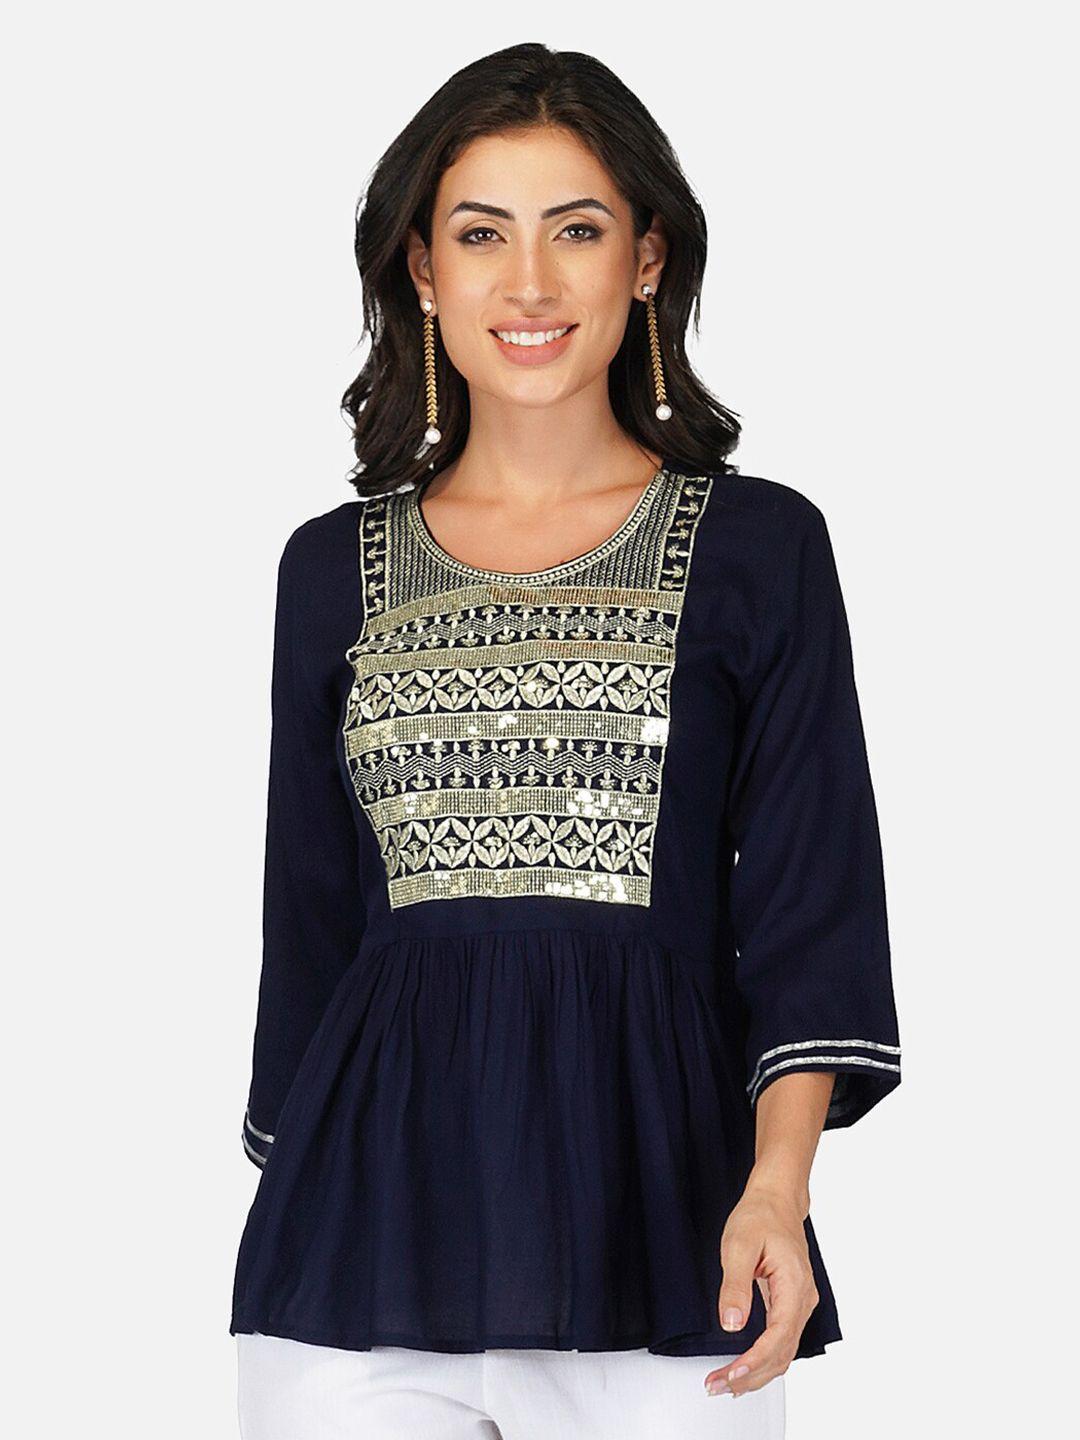 aarti fashion  embellished longline top